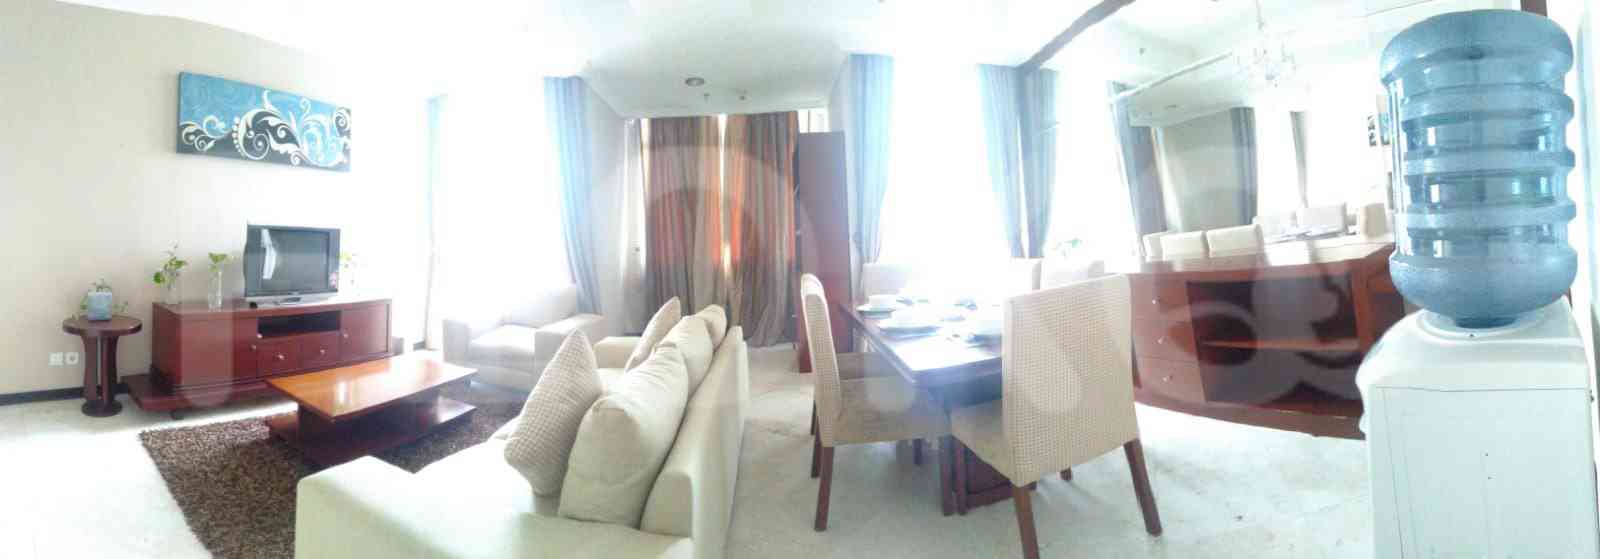 3 Bedroom on 17th Floor for Rent in Bellagio Residence - fku626 6